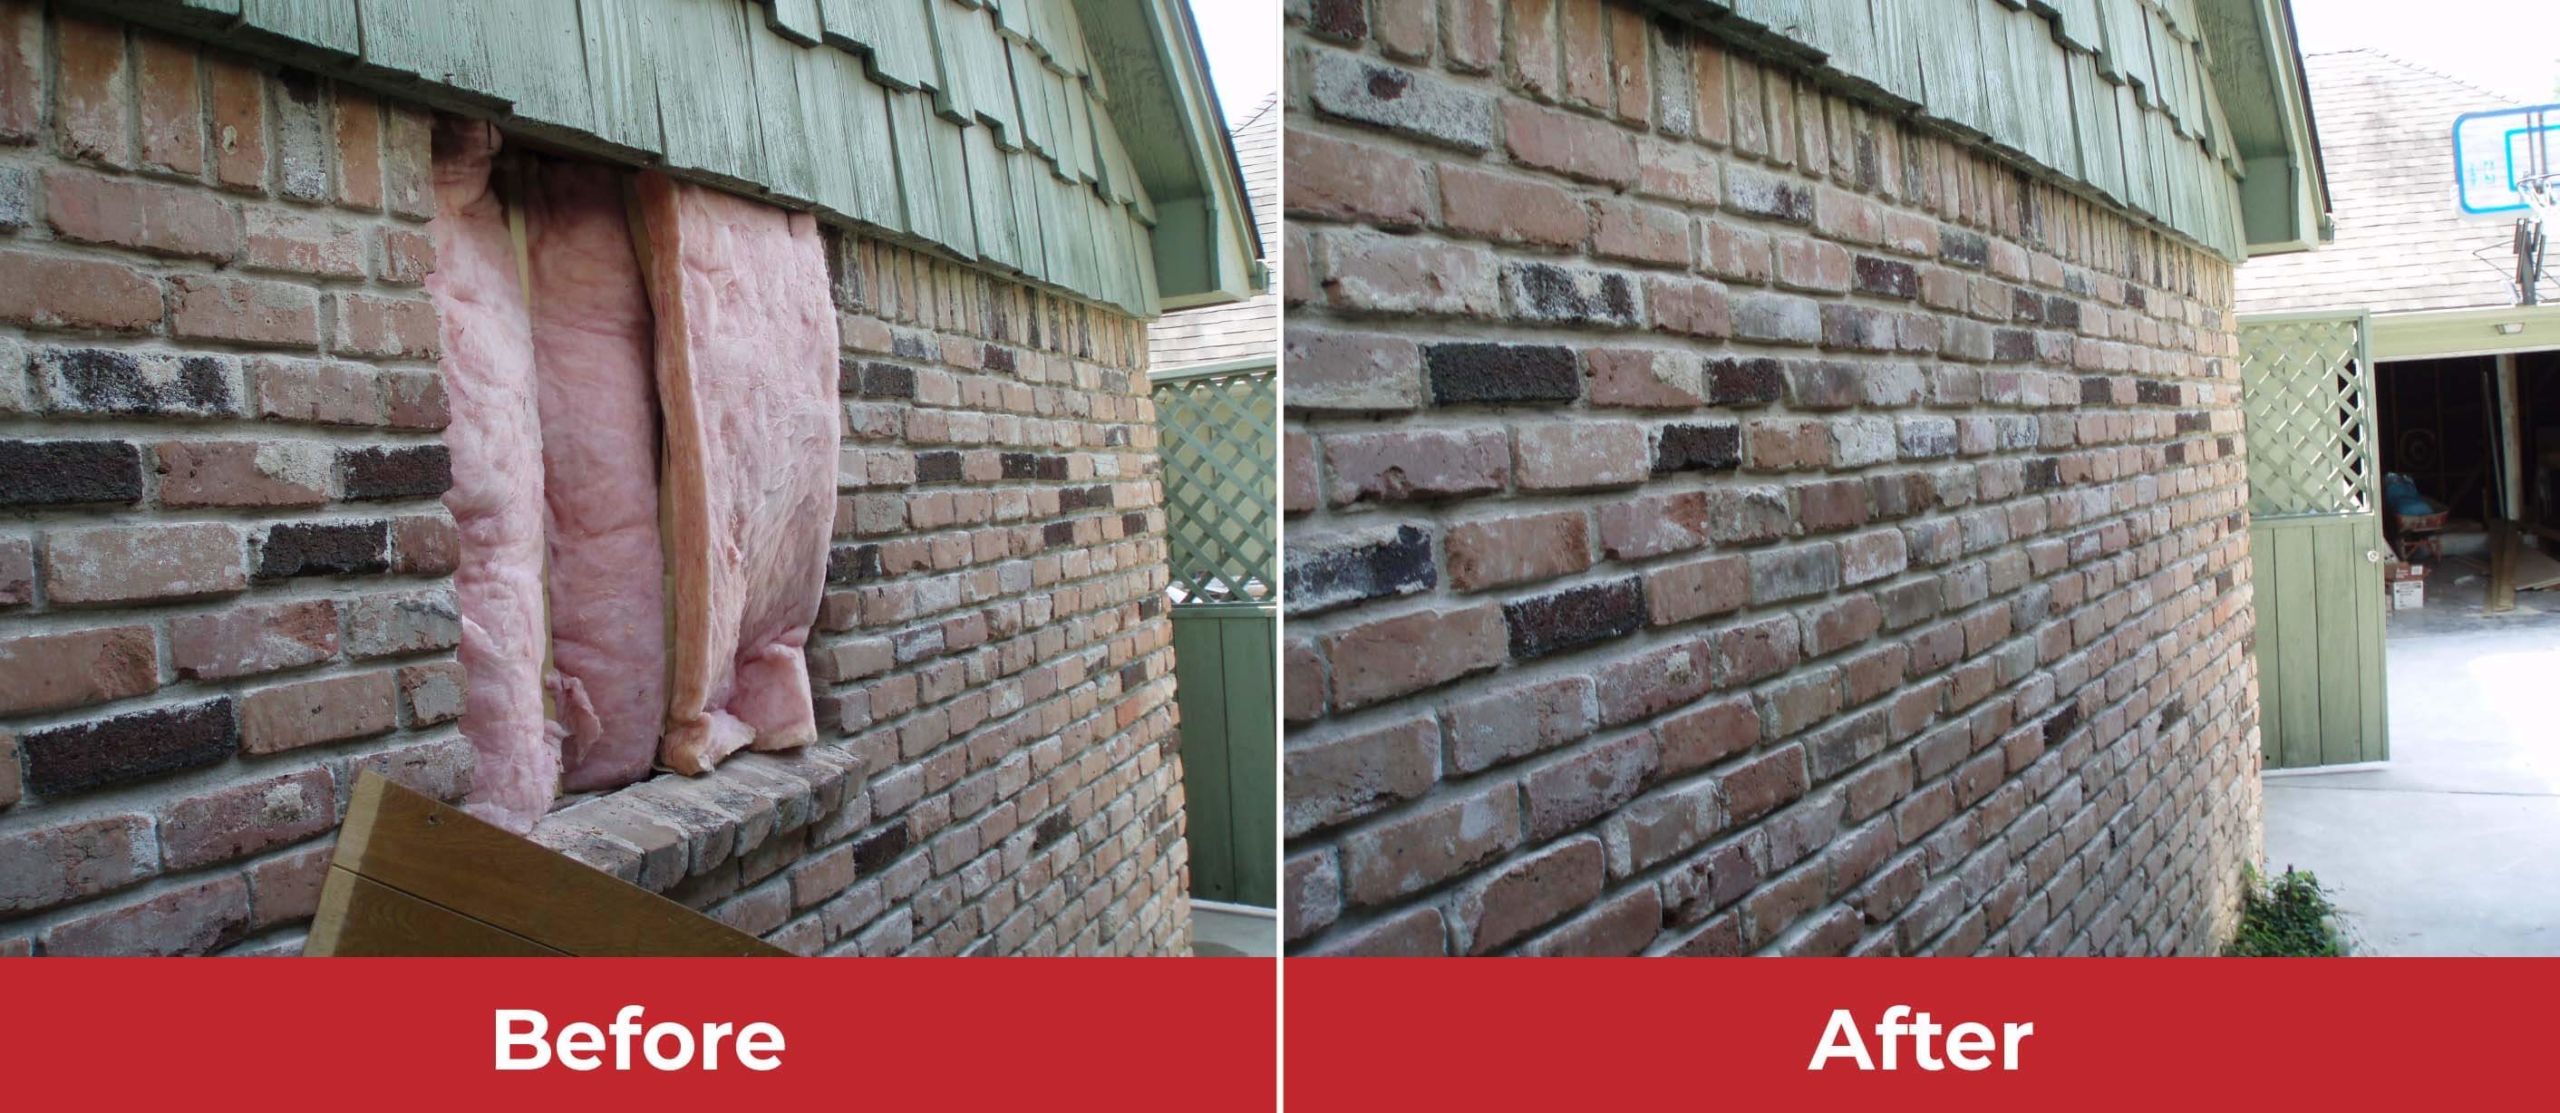 brick wall repair before and after